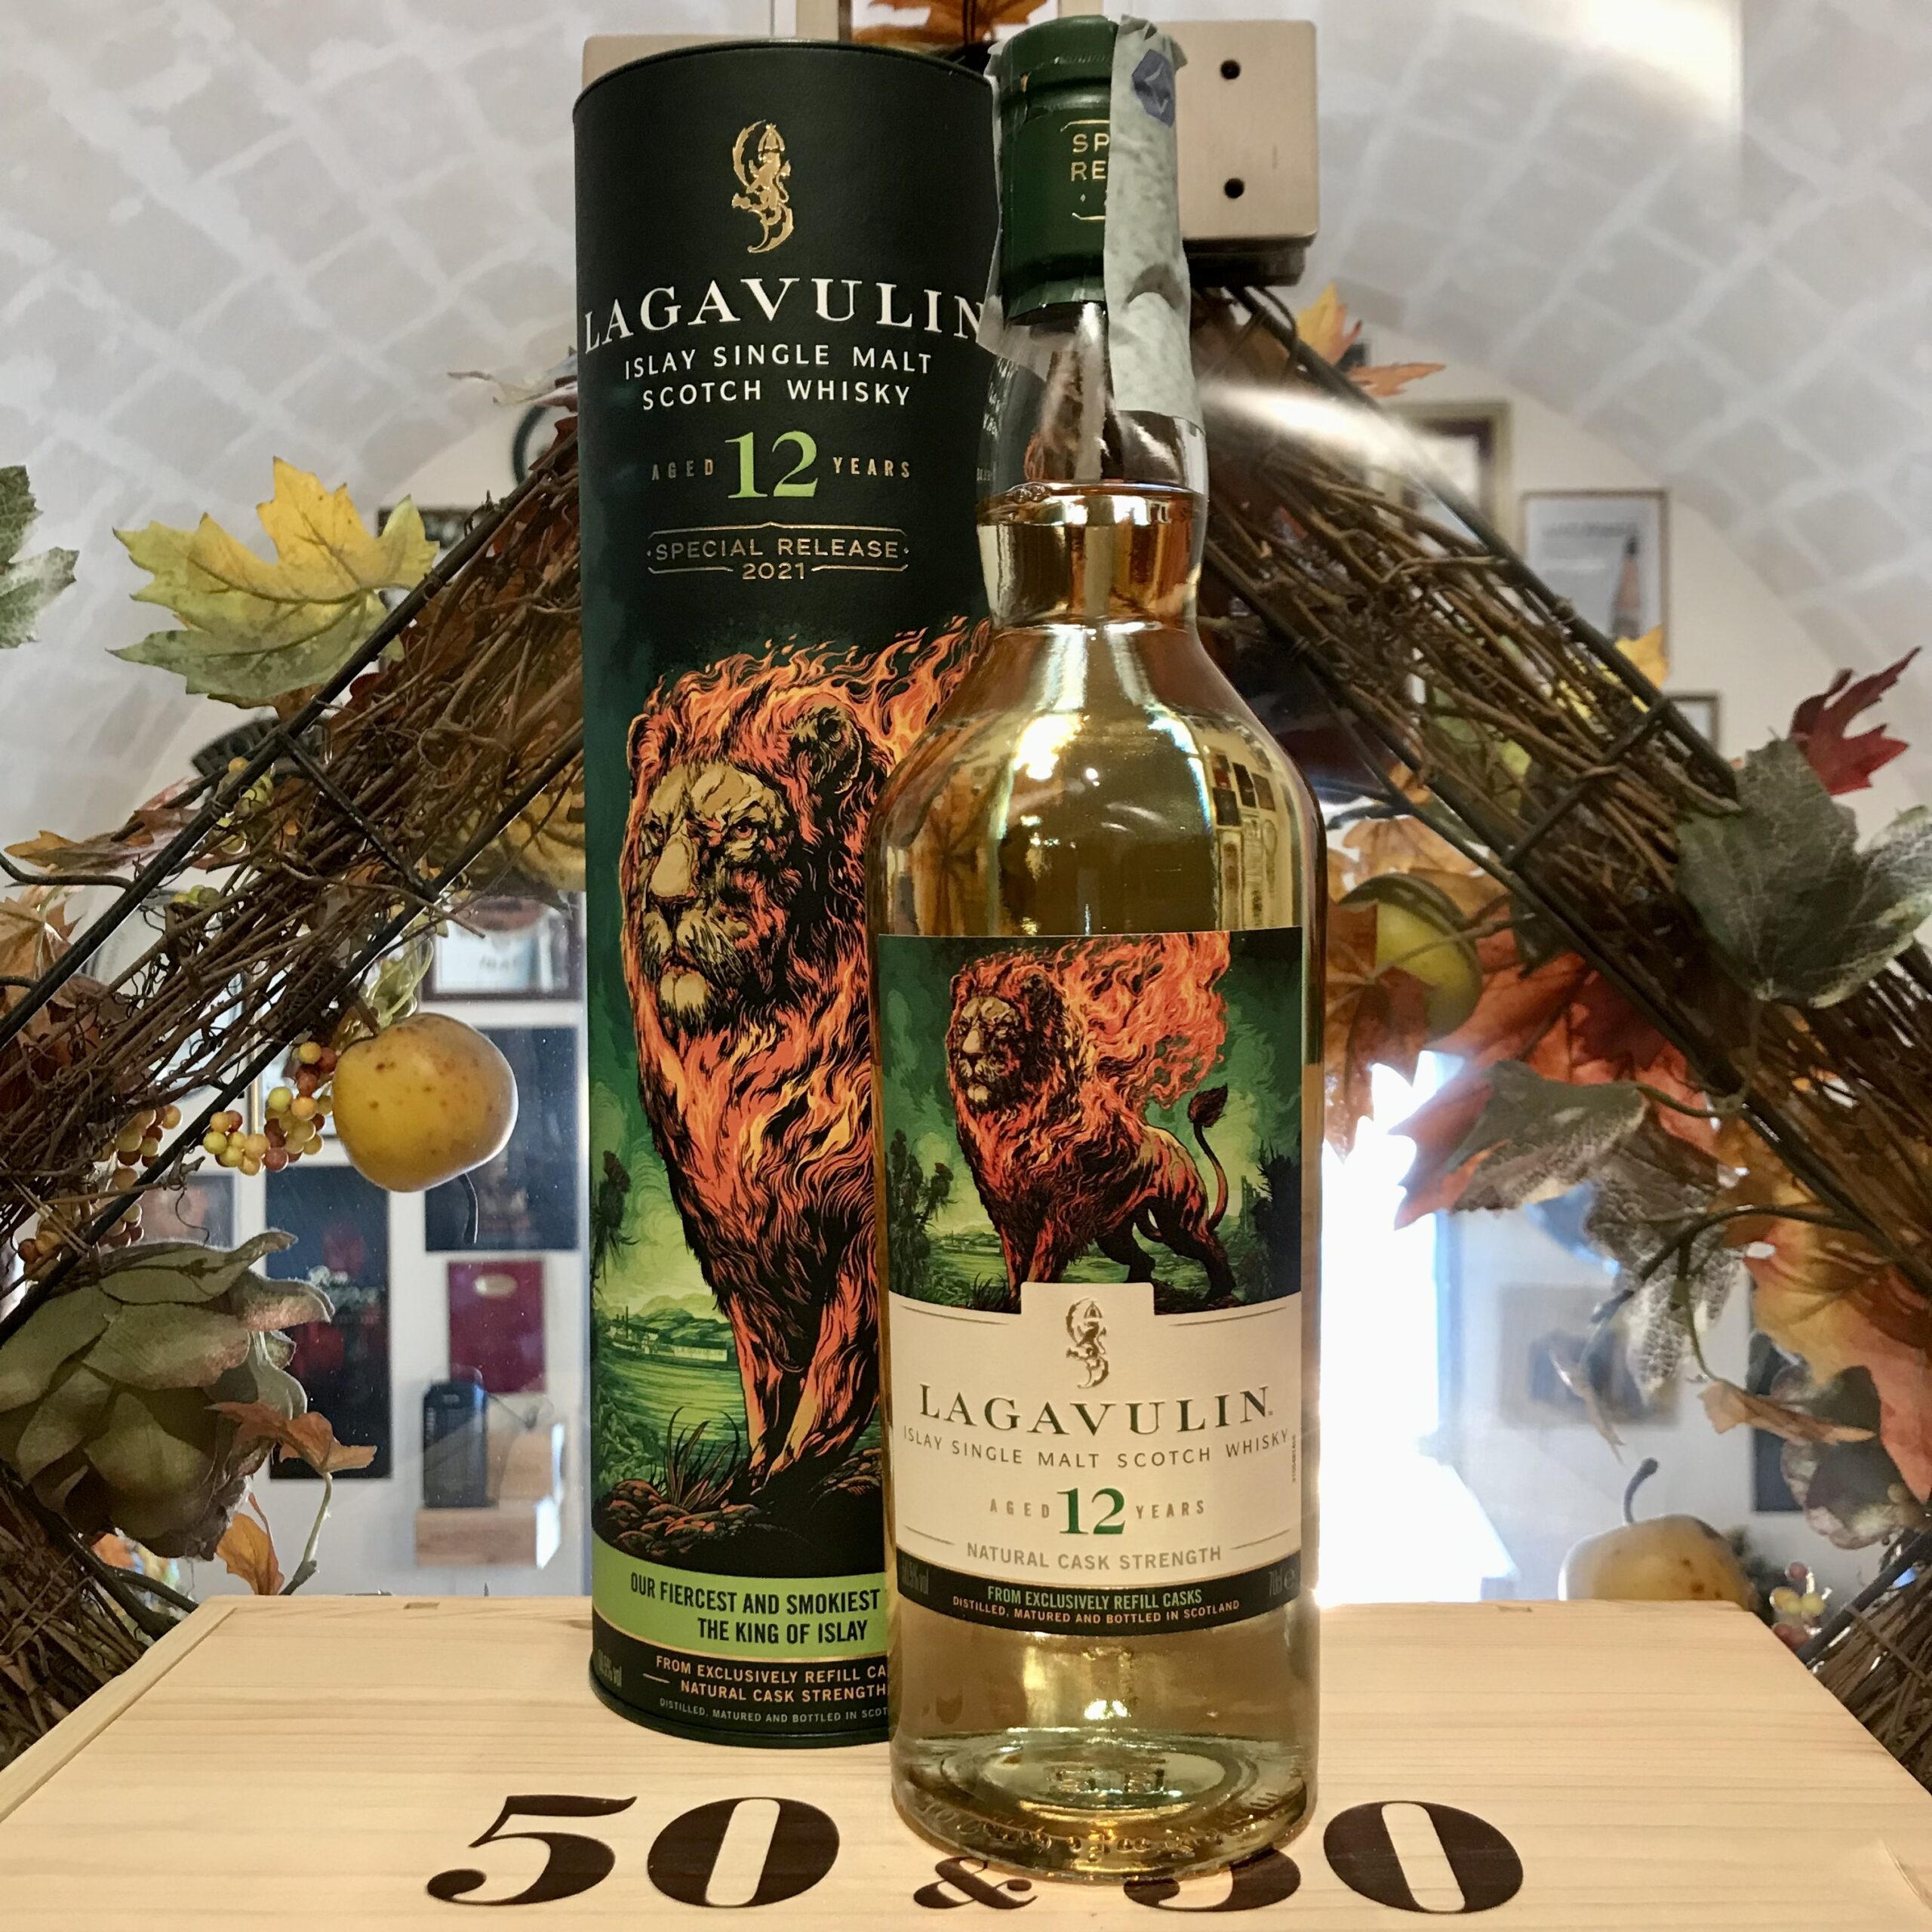 Lagavulin Islay Single Malt Scotch Whisky 12 YO Special Release 2021